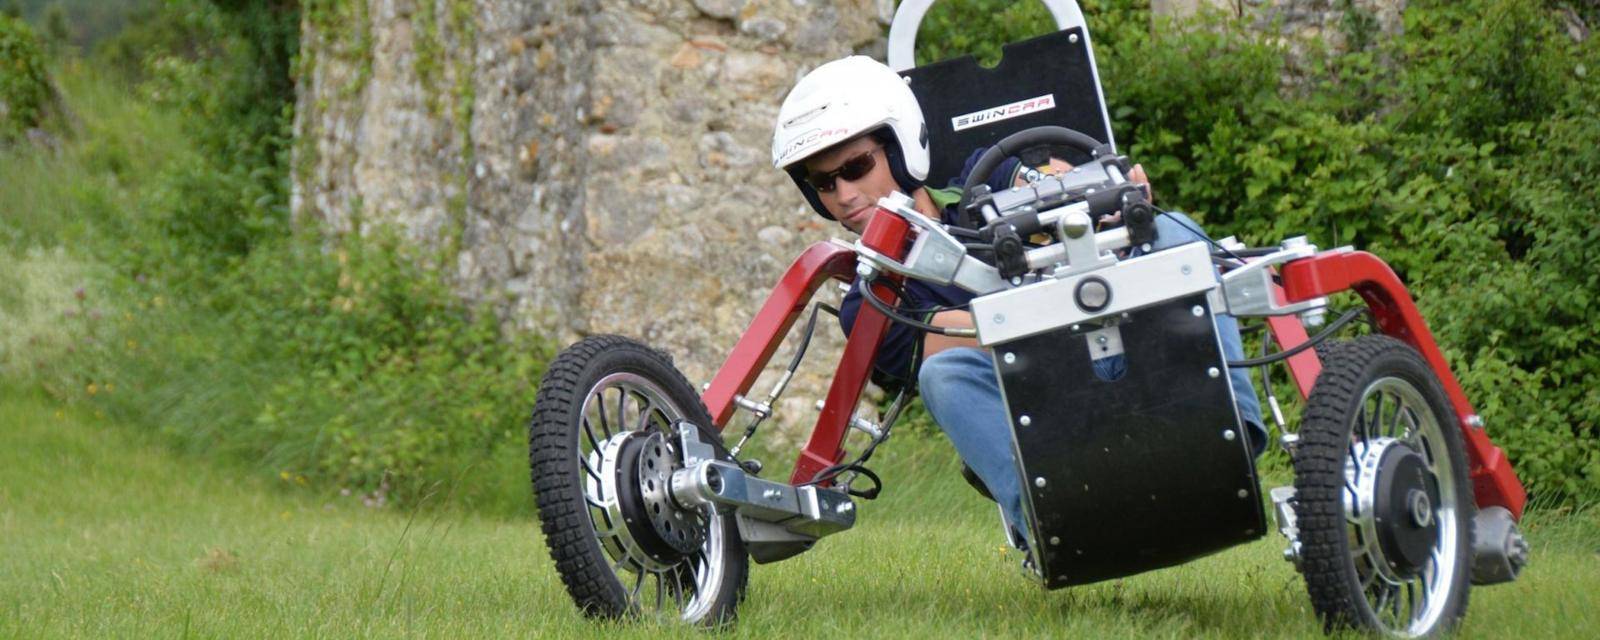 The Swincar E-Spider is the world's most amazing ATV